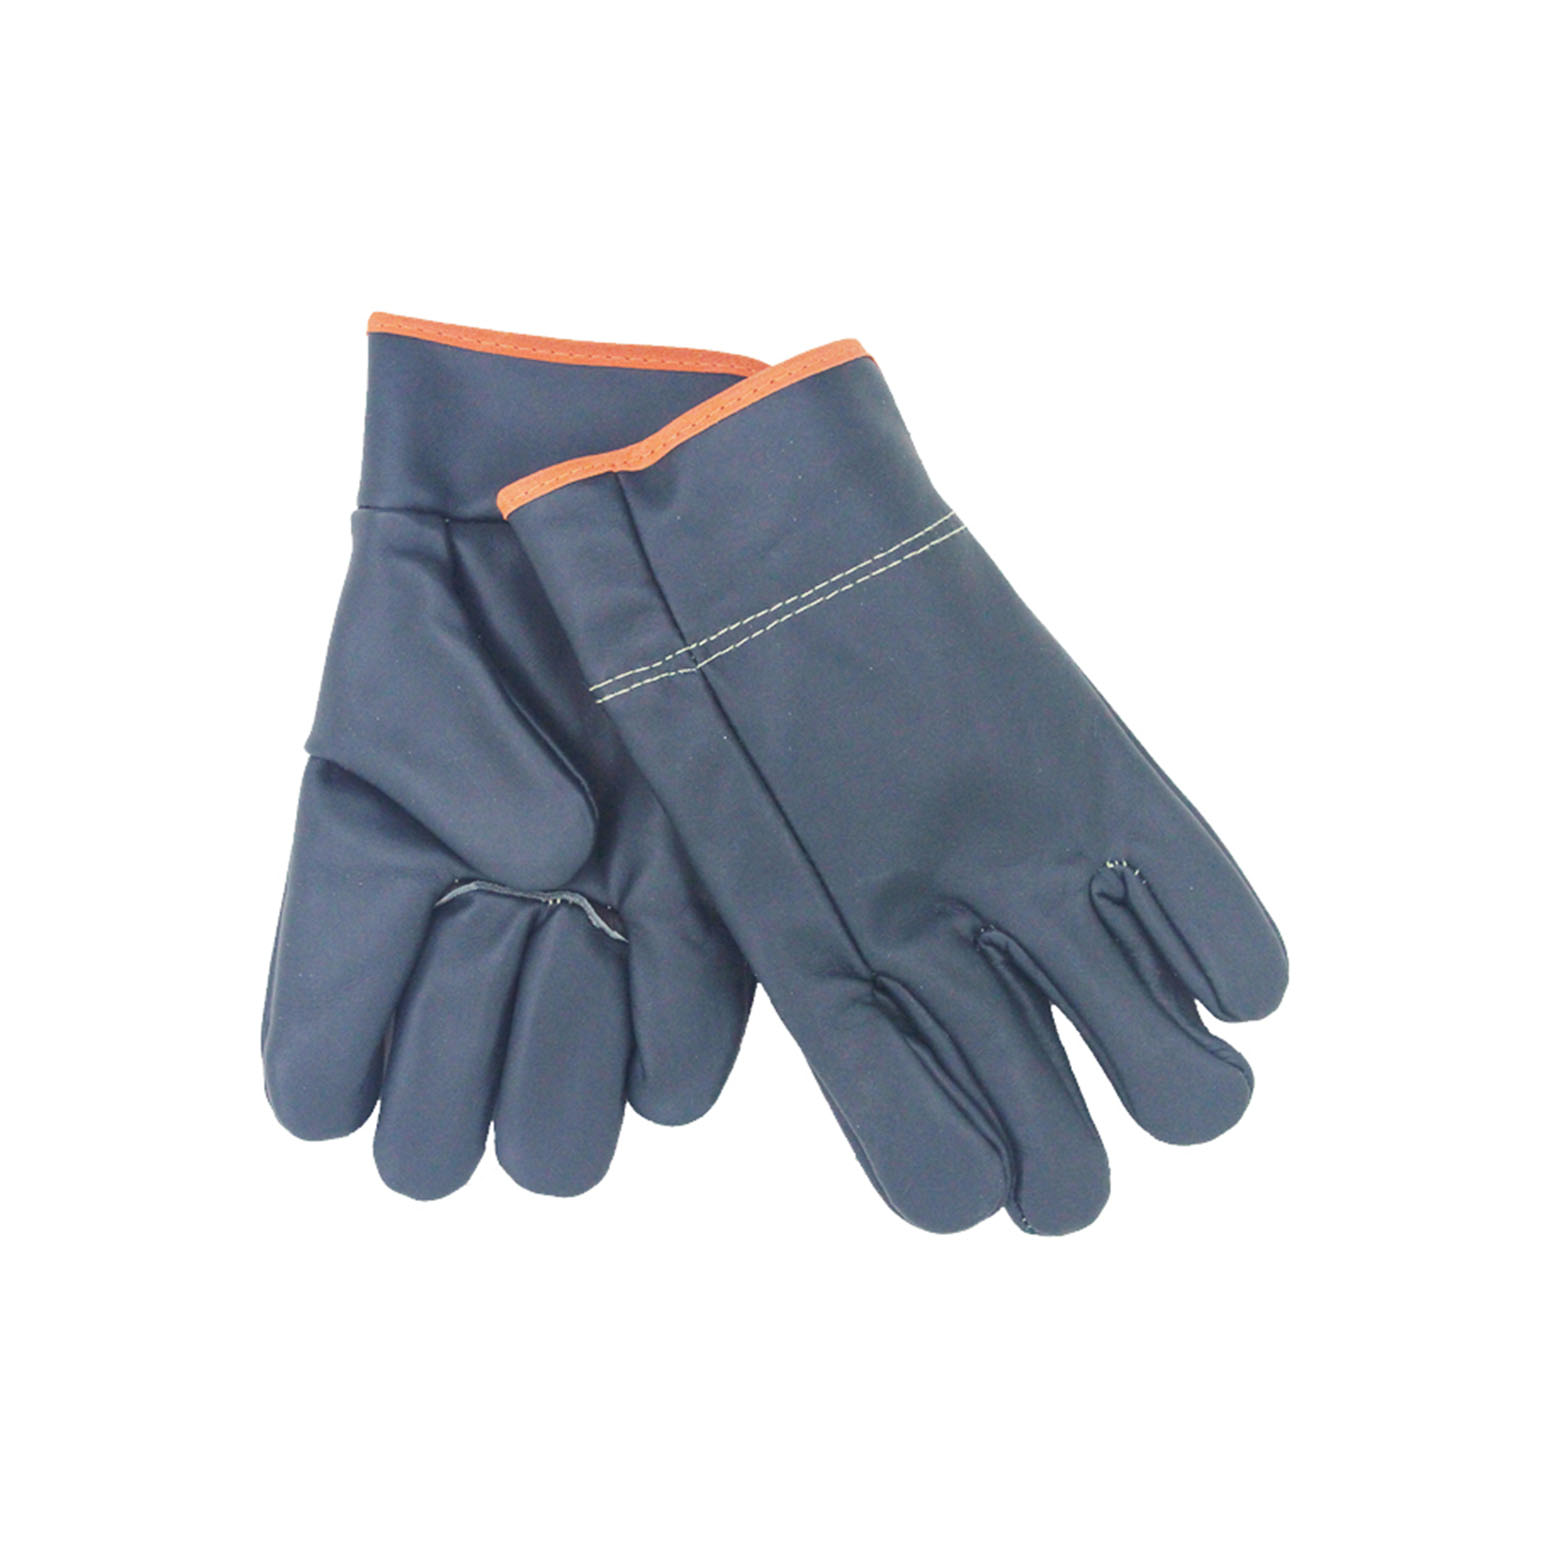 Get Star Weld Dark color genuine leather gloves